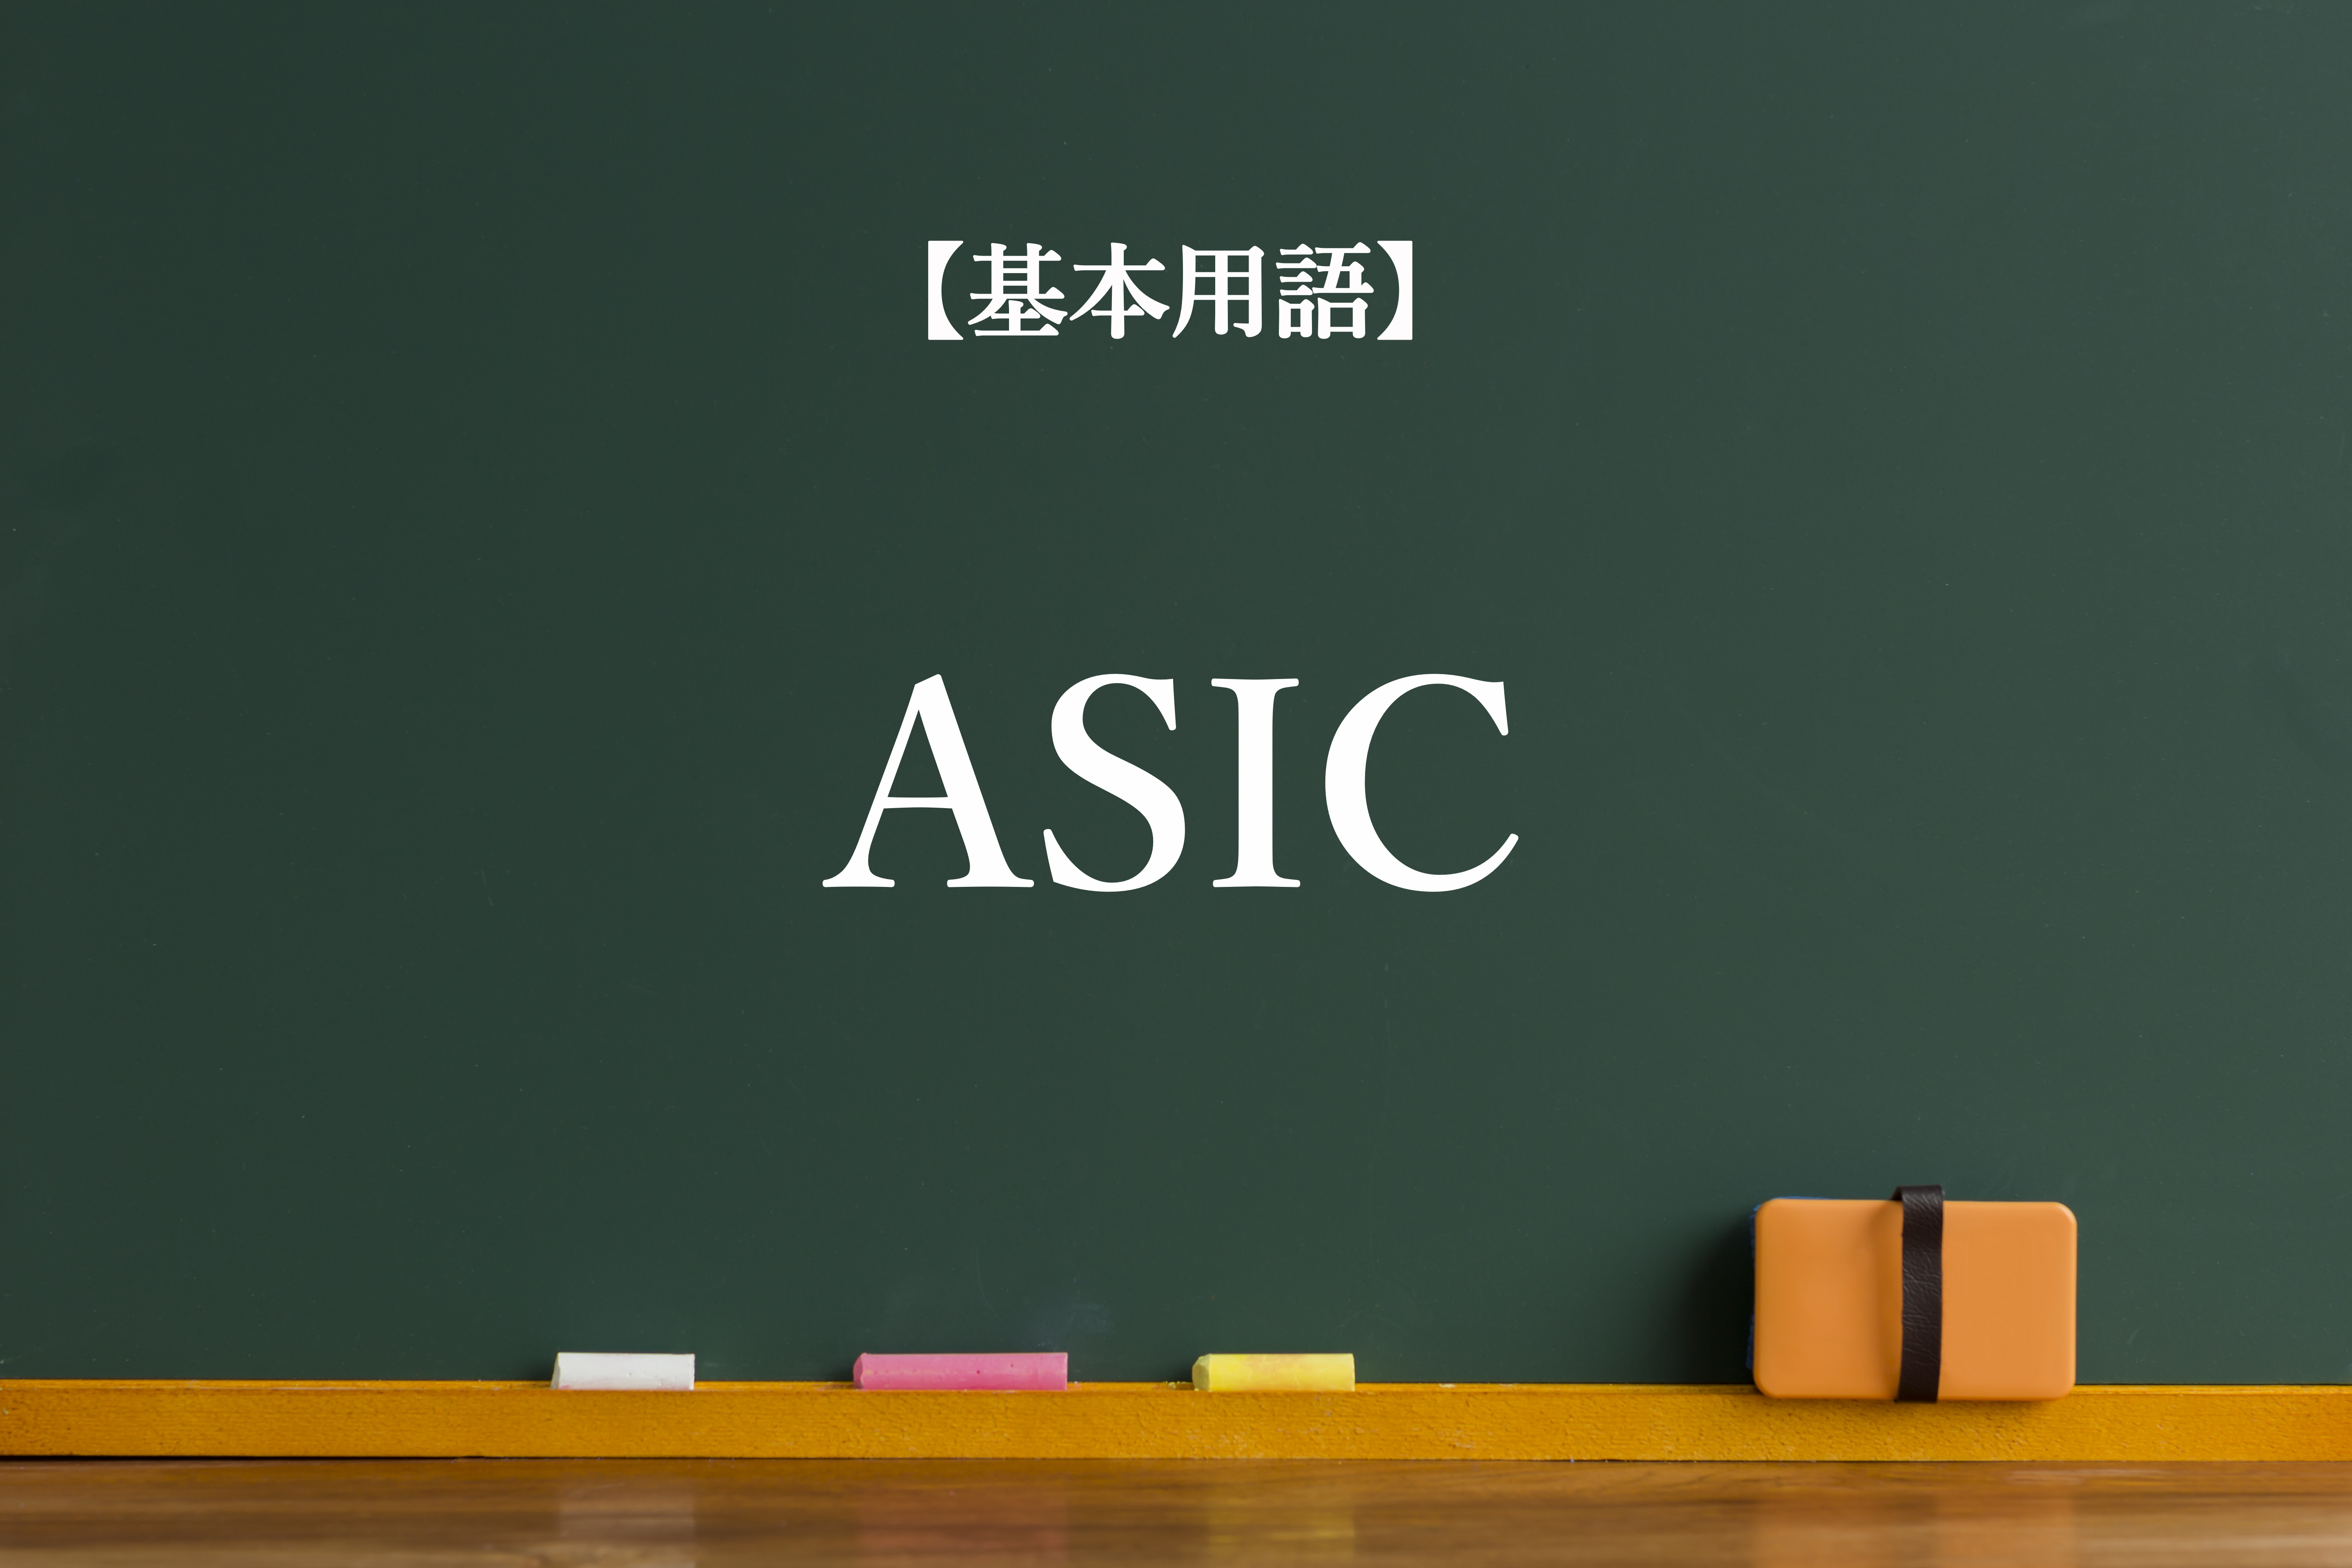 ASIC（エーシック）とは？仮想通貨における意味について